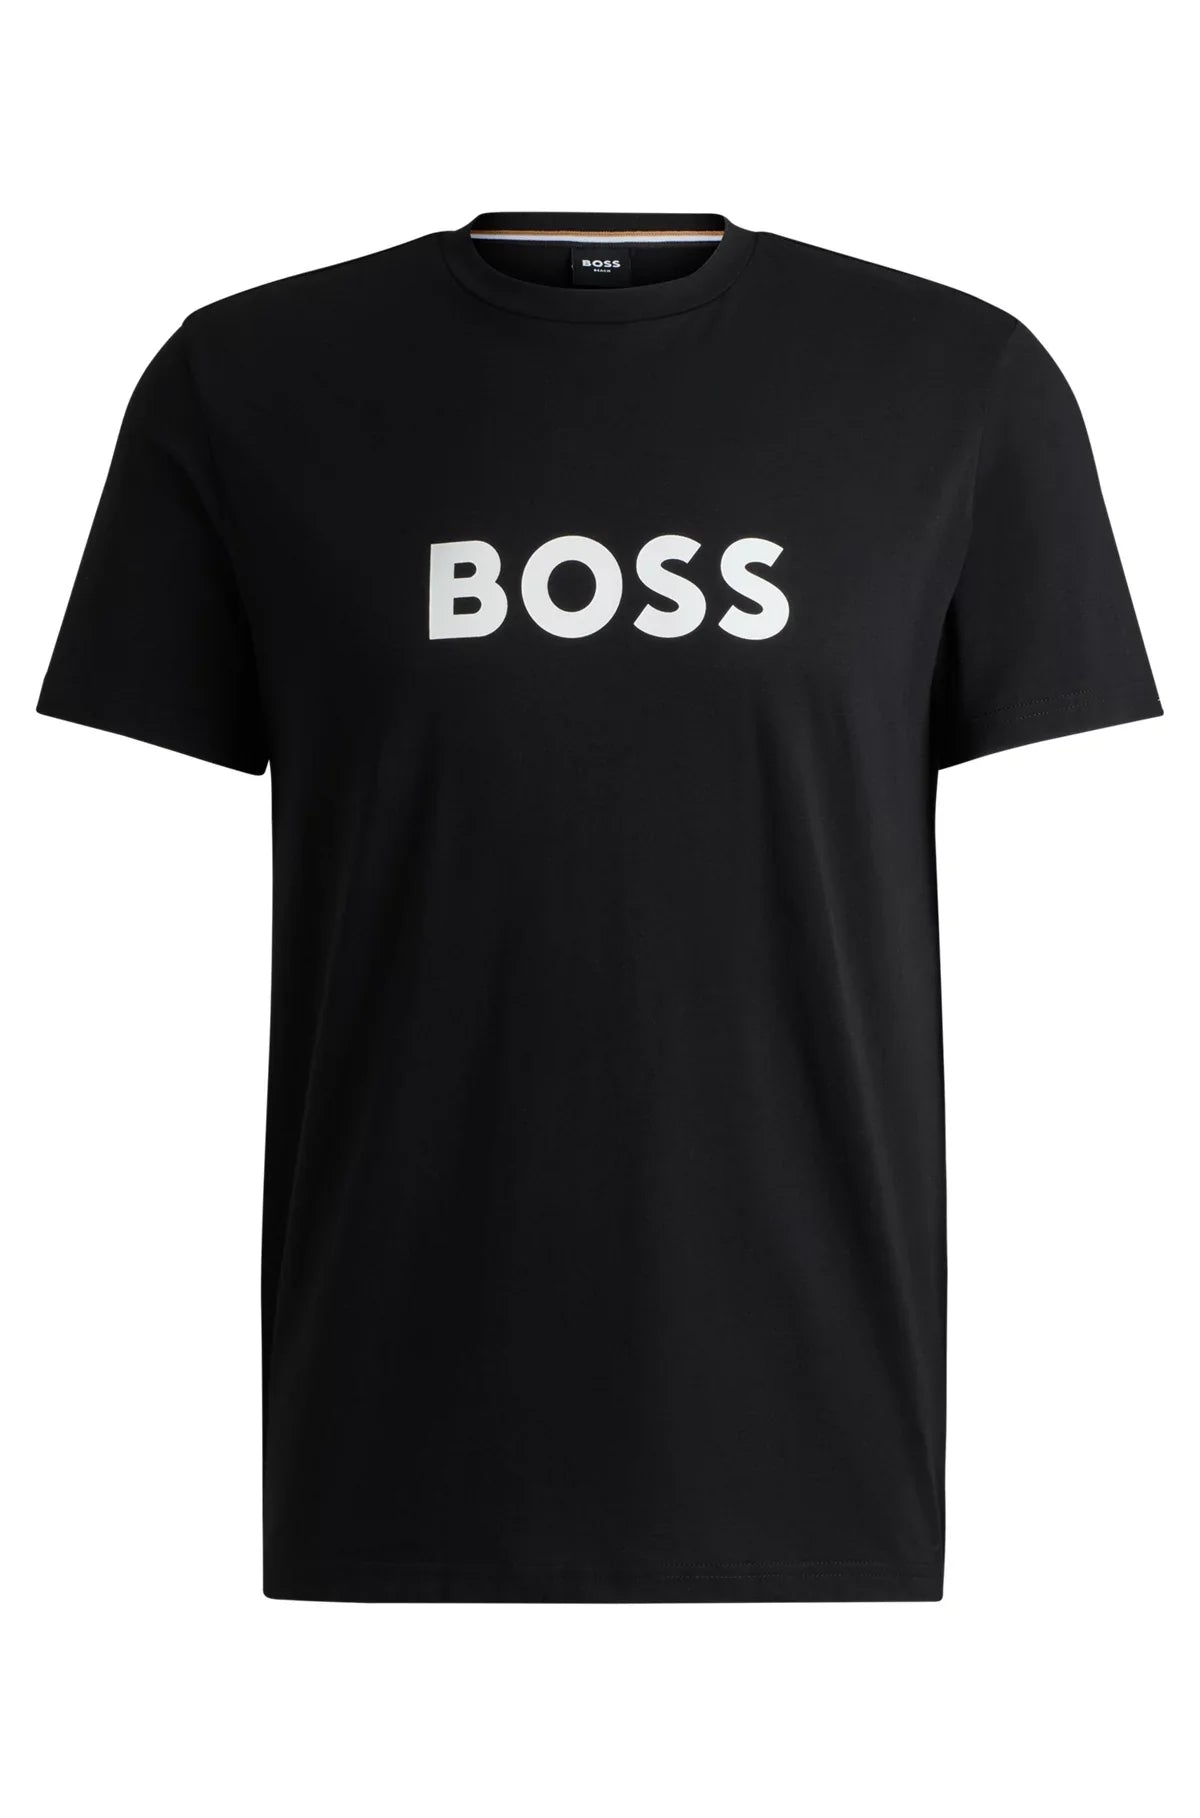 Camiseta Boss Black